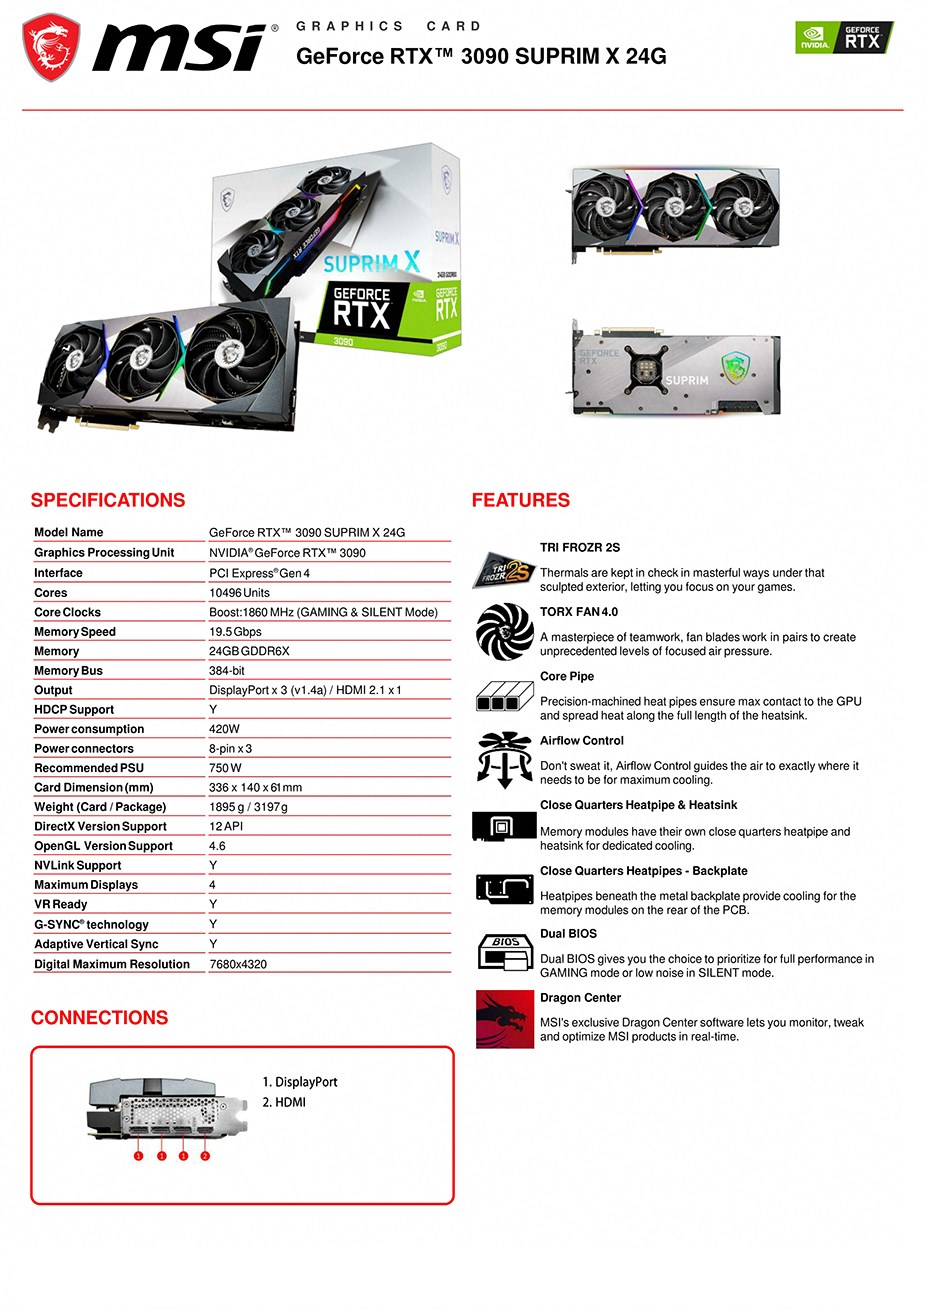 MSI GeForce RTX 3090 SUPRIM X 24GB Video Card - Overview 1